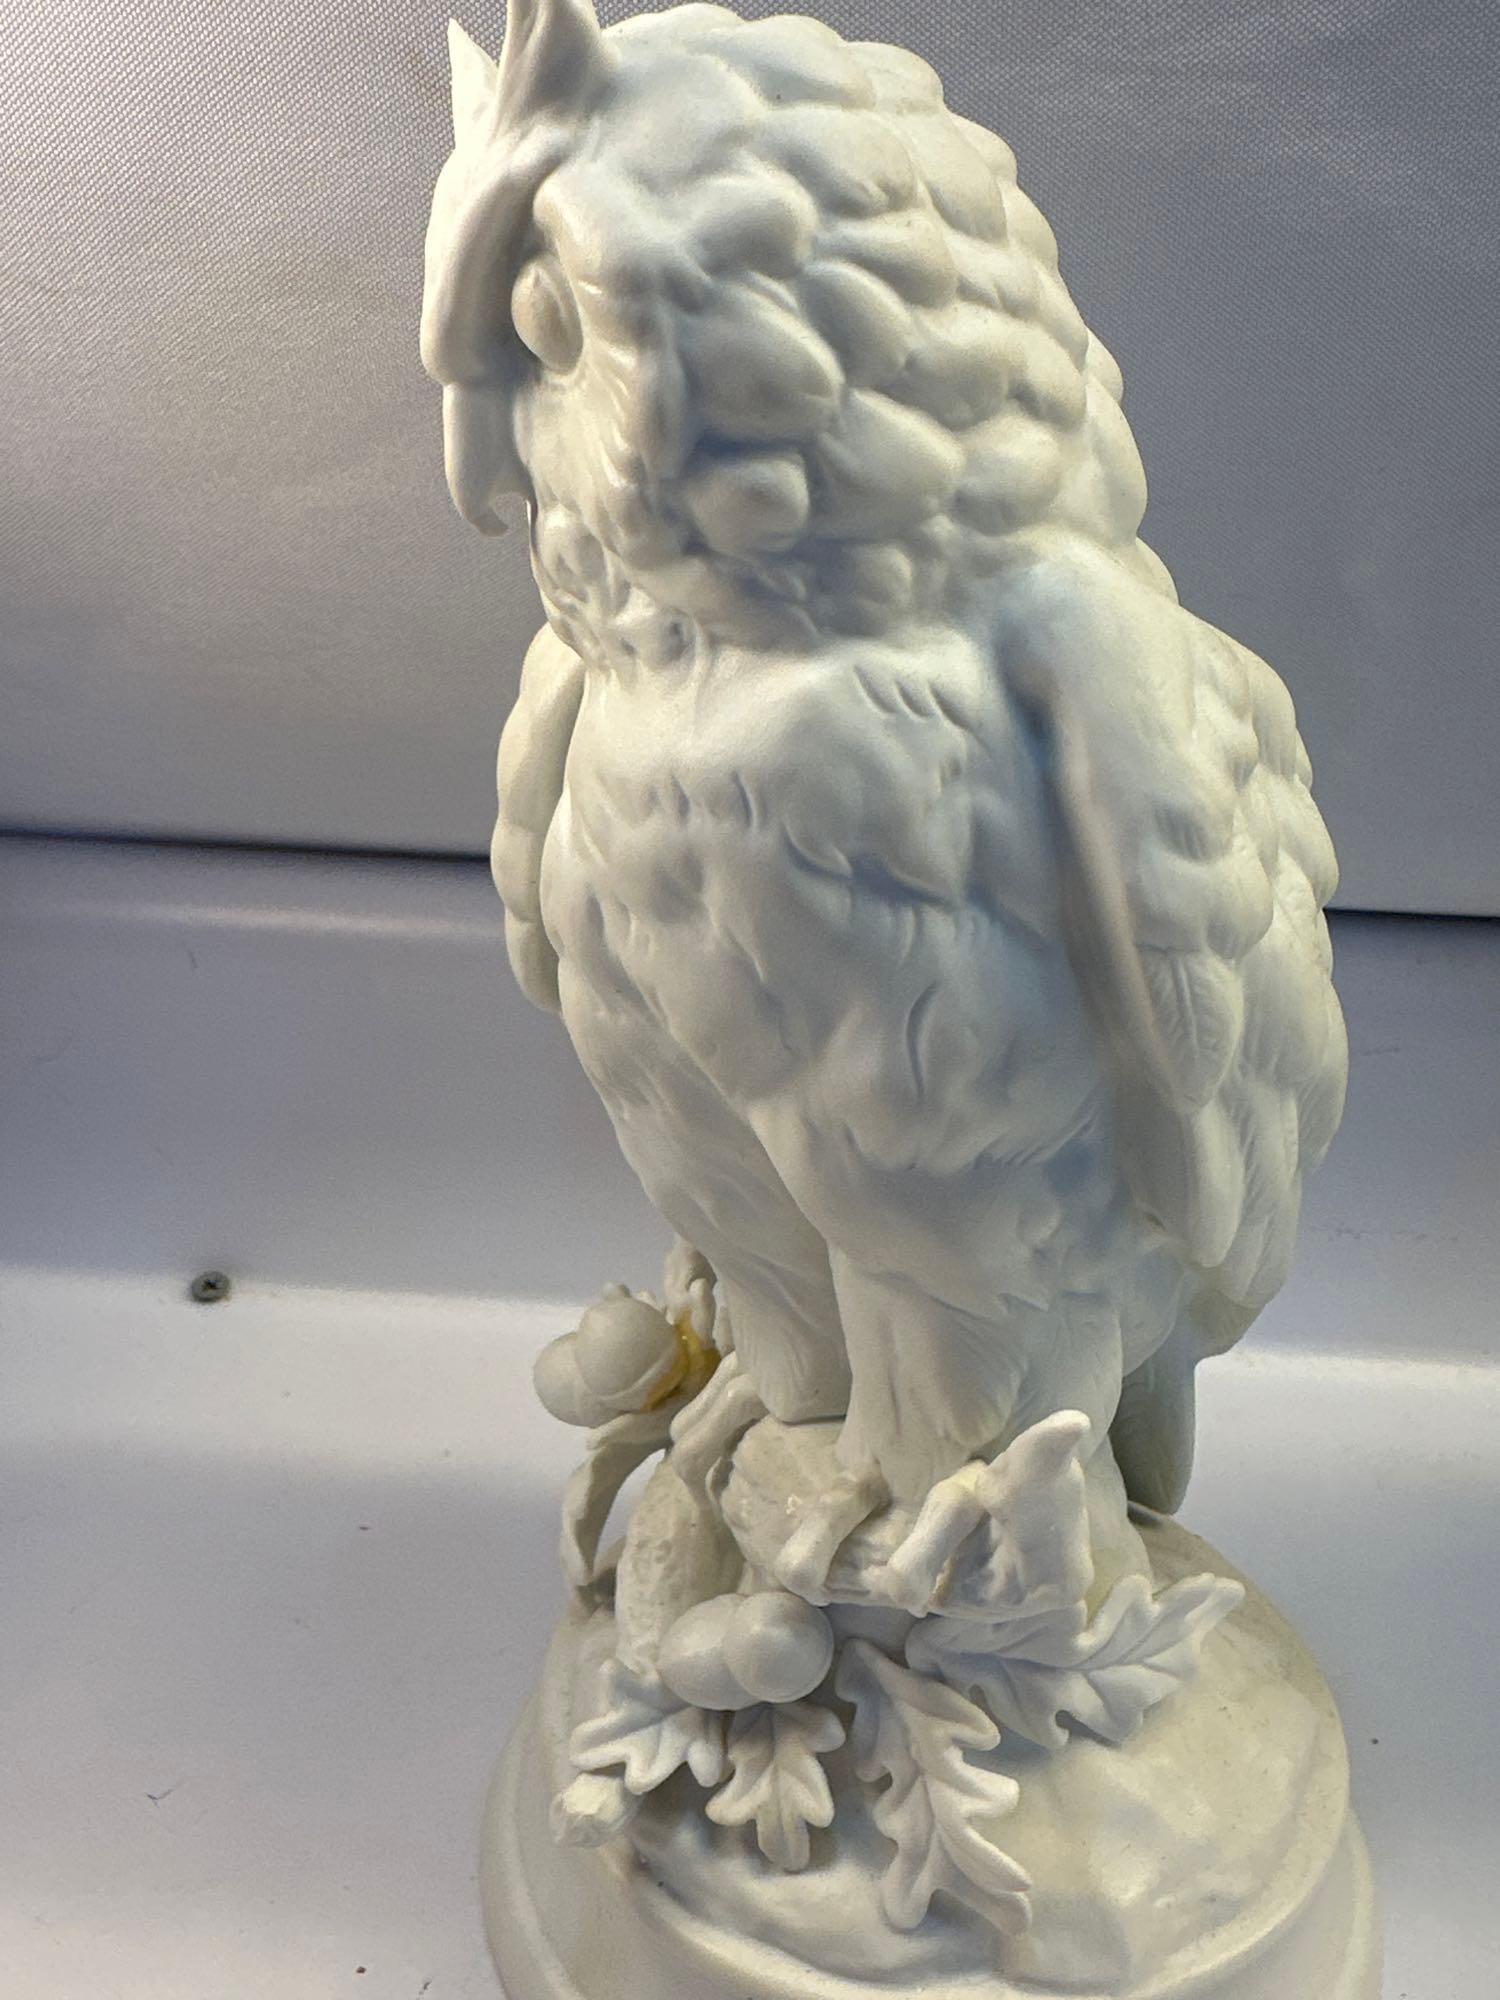 Set of 2 Ceramic Decorative Owls